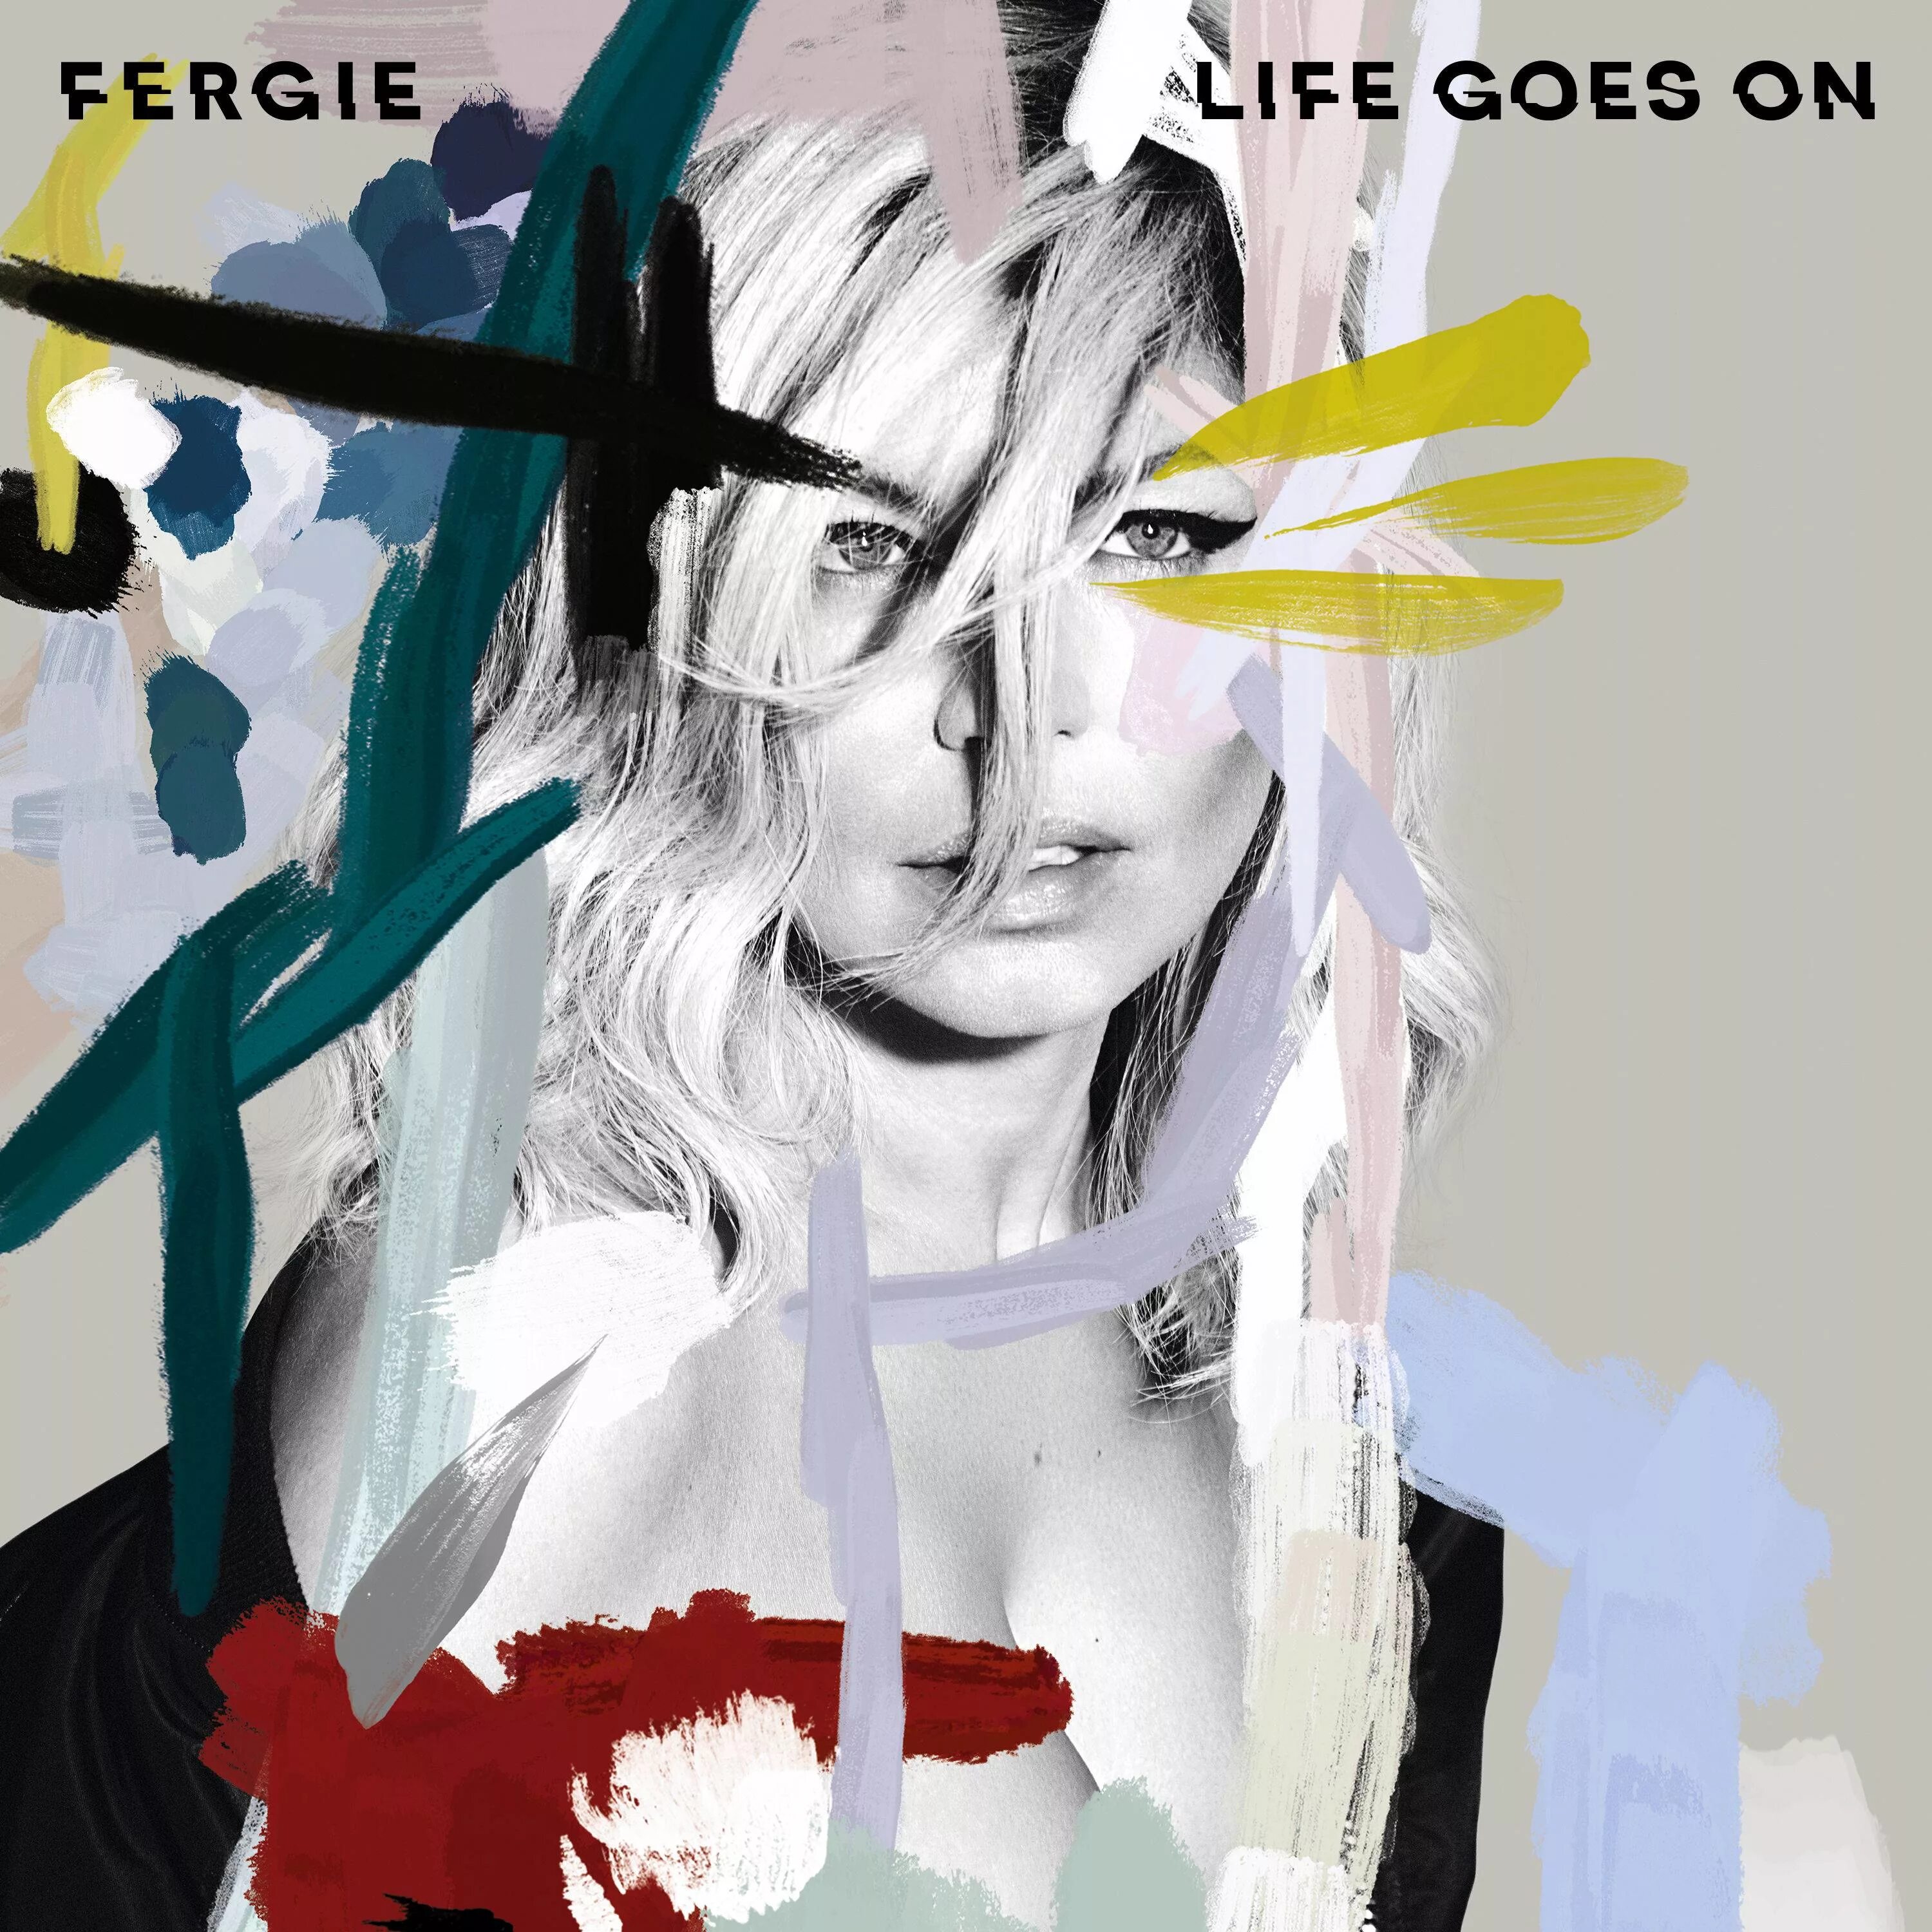 Life s goes on. Life goes on Ферги. Fergie альбомы. Ферги обложка. Обложки от альбомов Fergie.